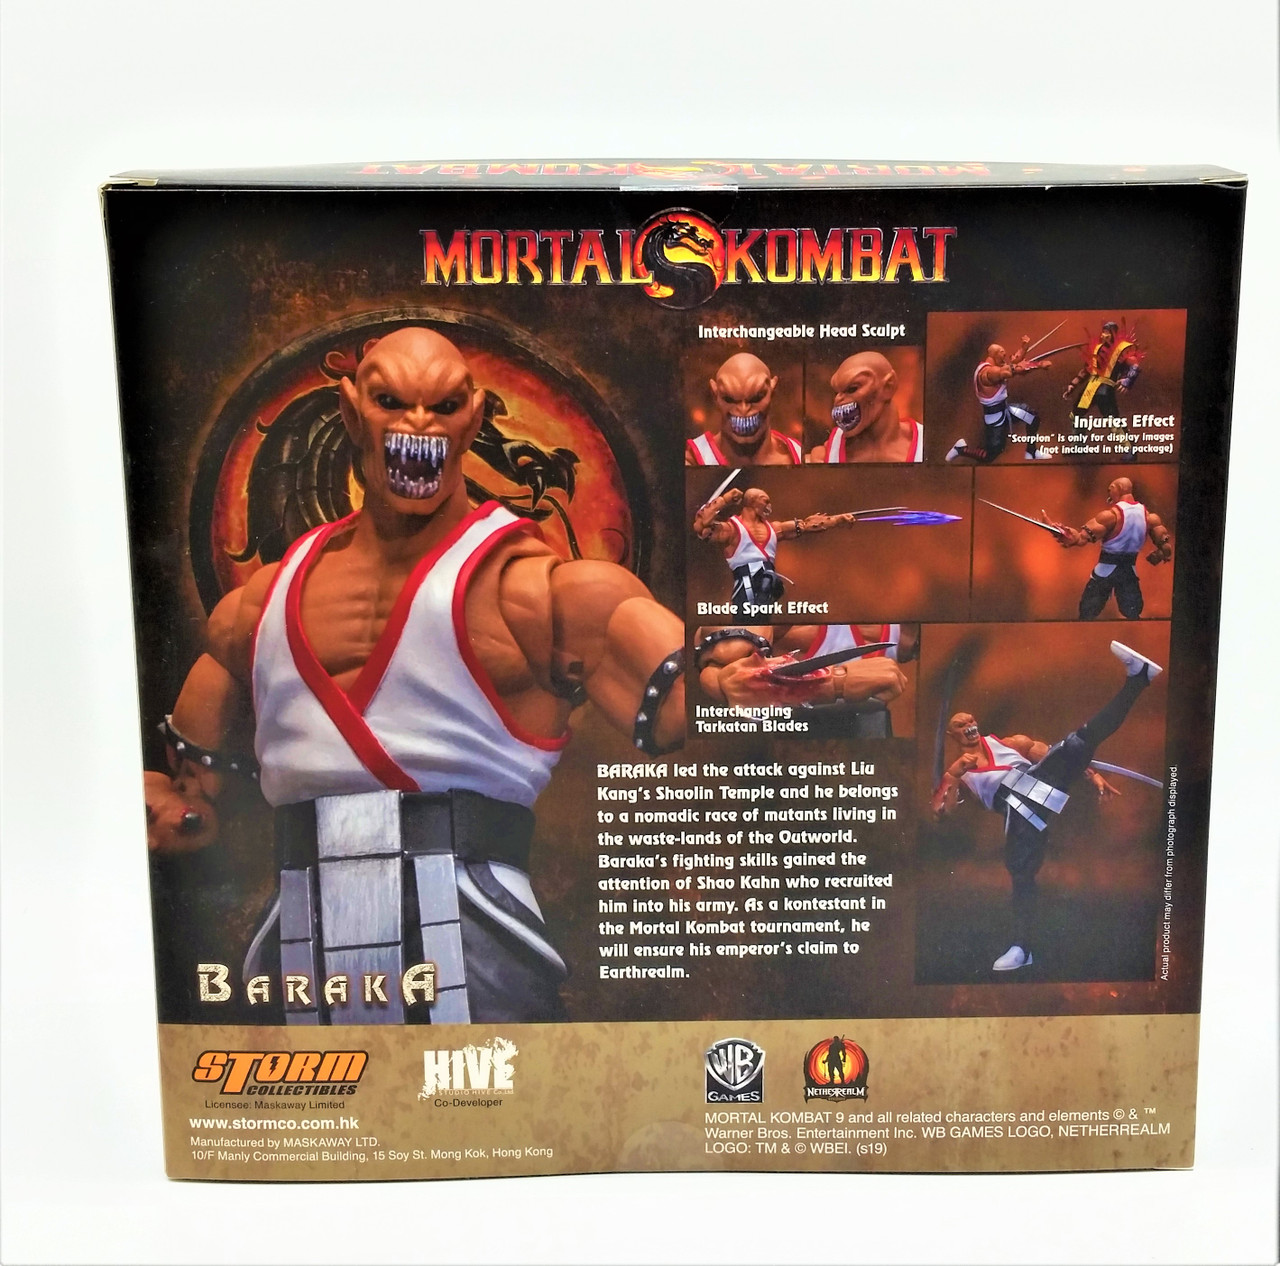 Shao Khan - Mortal Kombat - Funko Wacky Wobbler